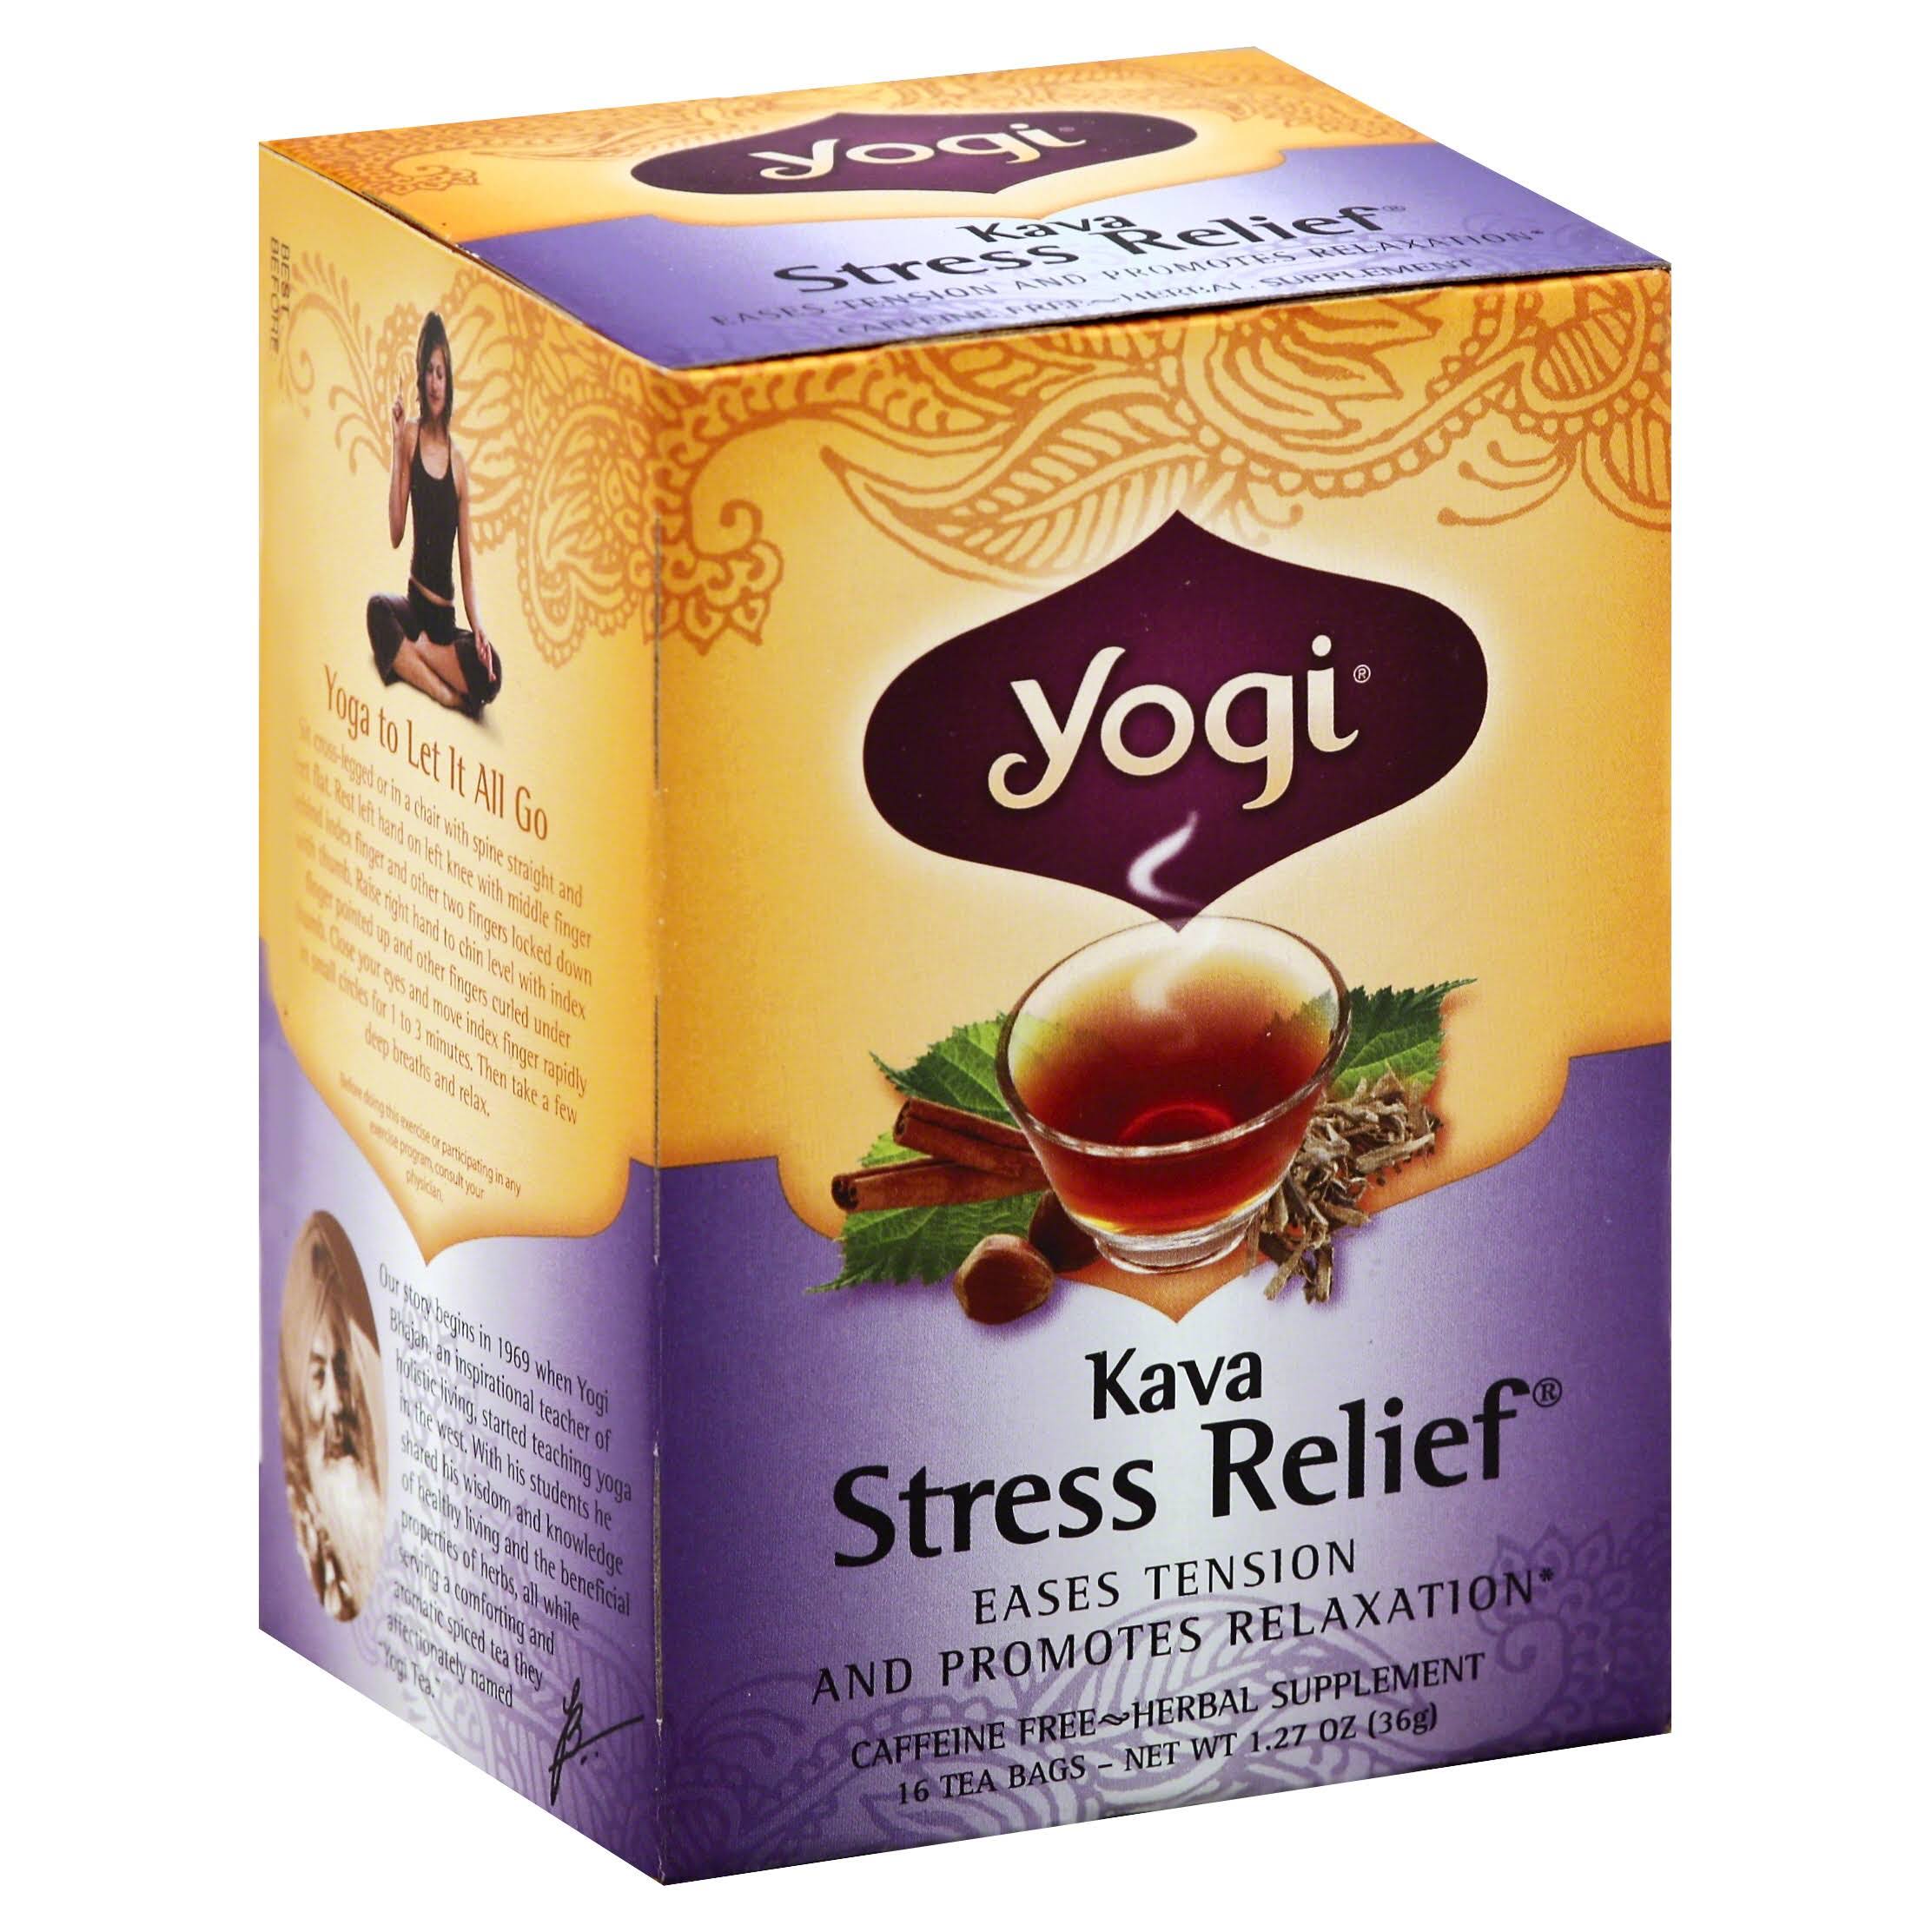 Yogi Tea Co. - Kava Stress Relief, 16 Tea Bags